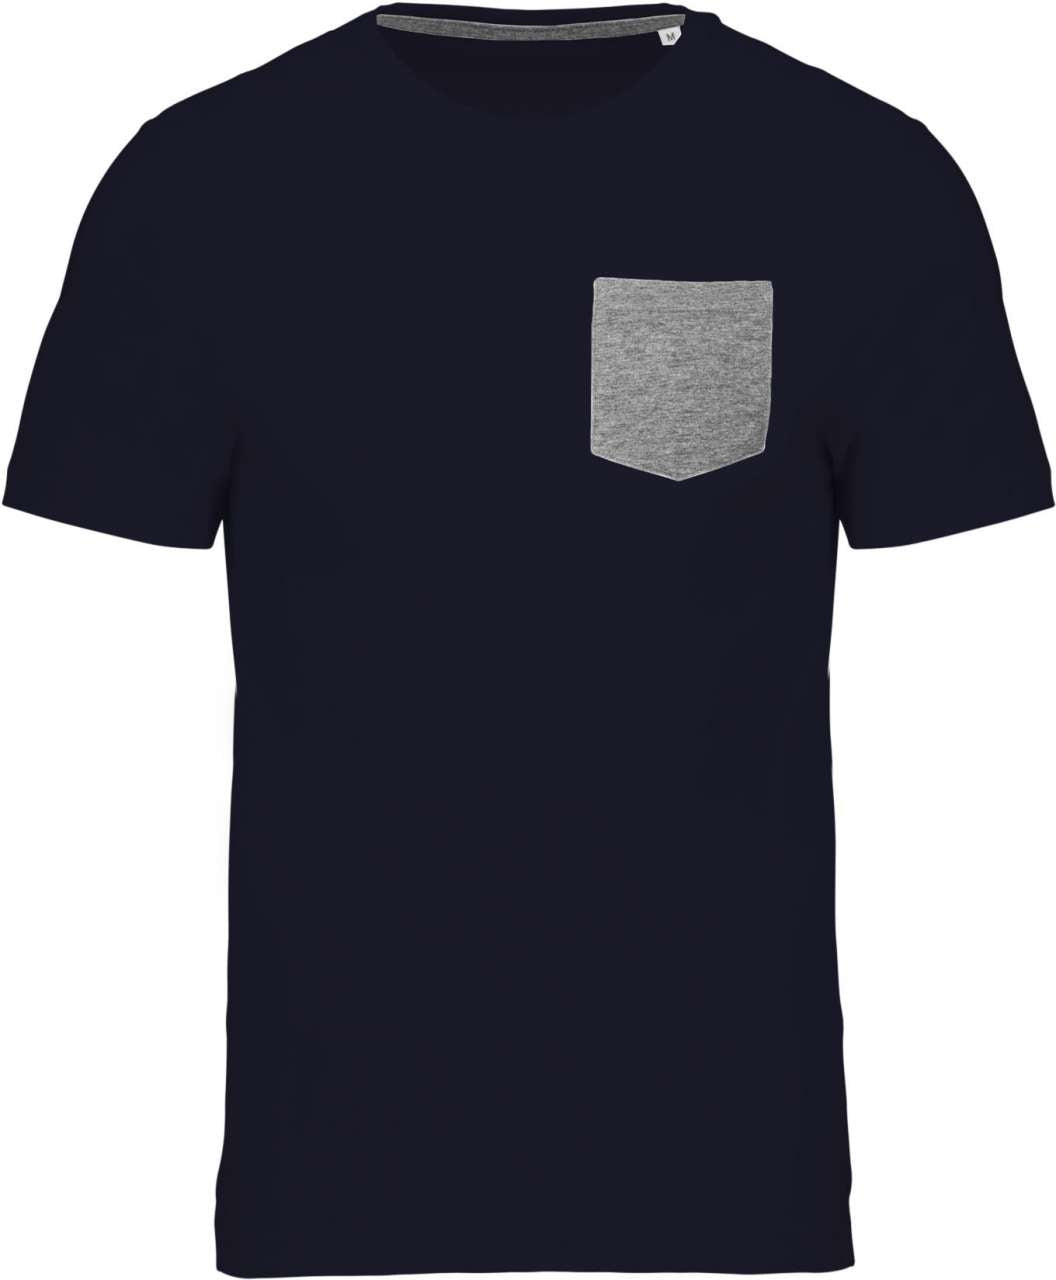 Kariban Herren T-Shirt Rundhals Kurzarm Sport Valueweight T Shirt